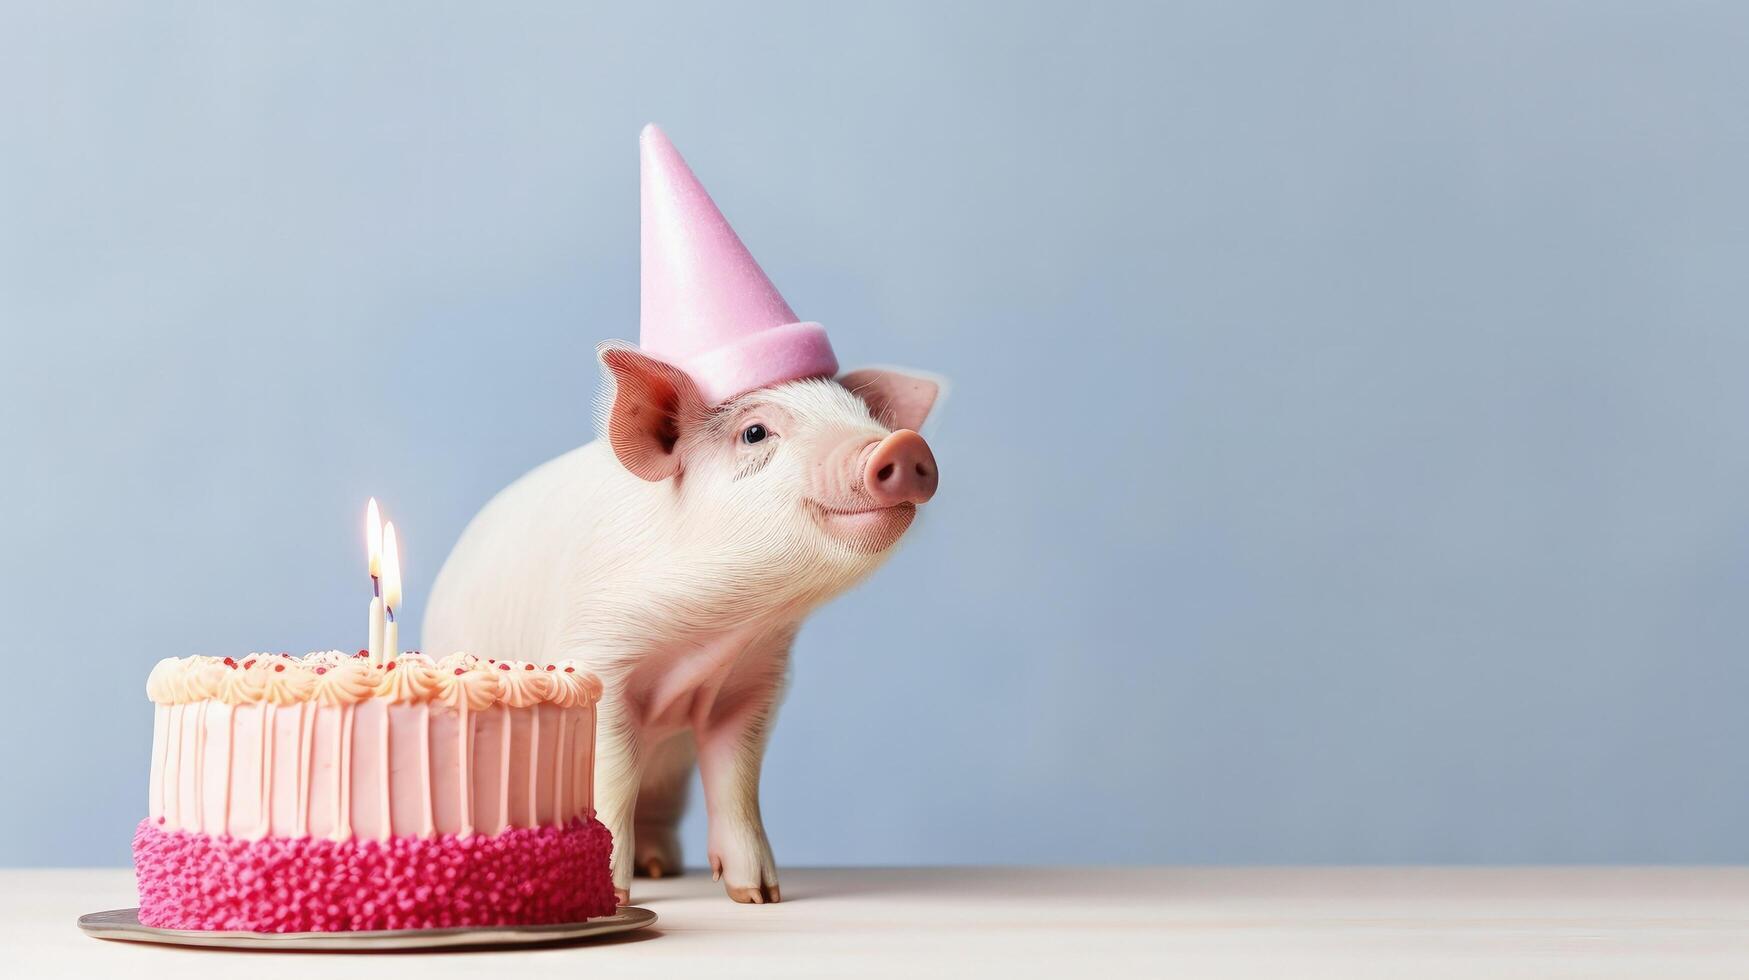 Cute Birthday pig with cake. Illustration photo